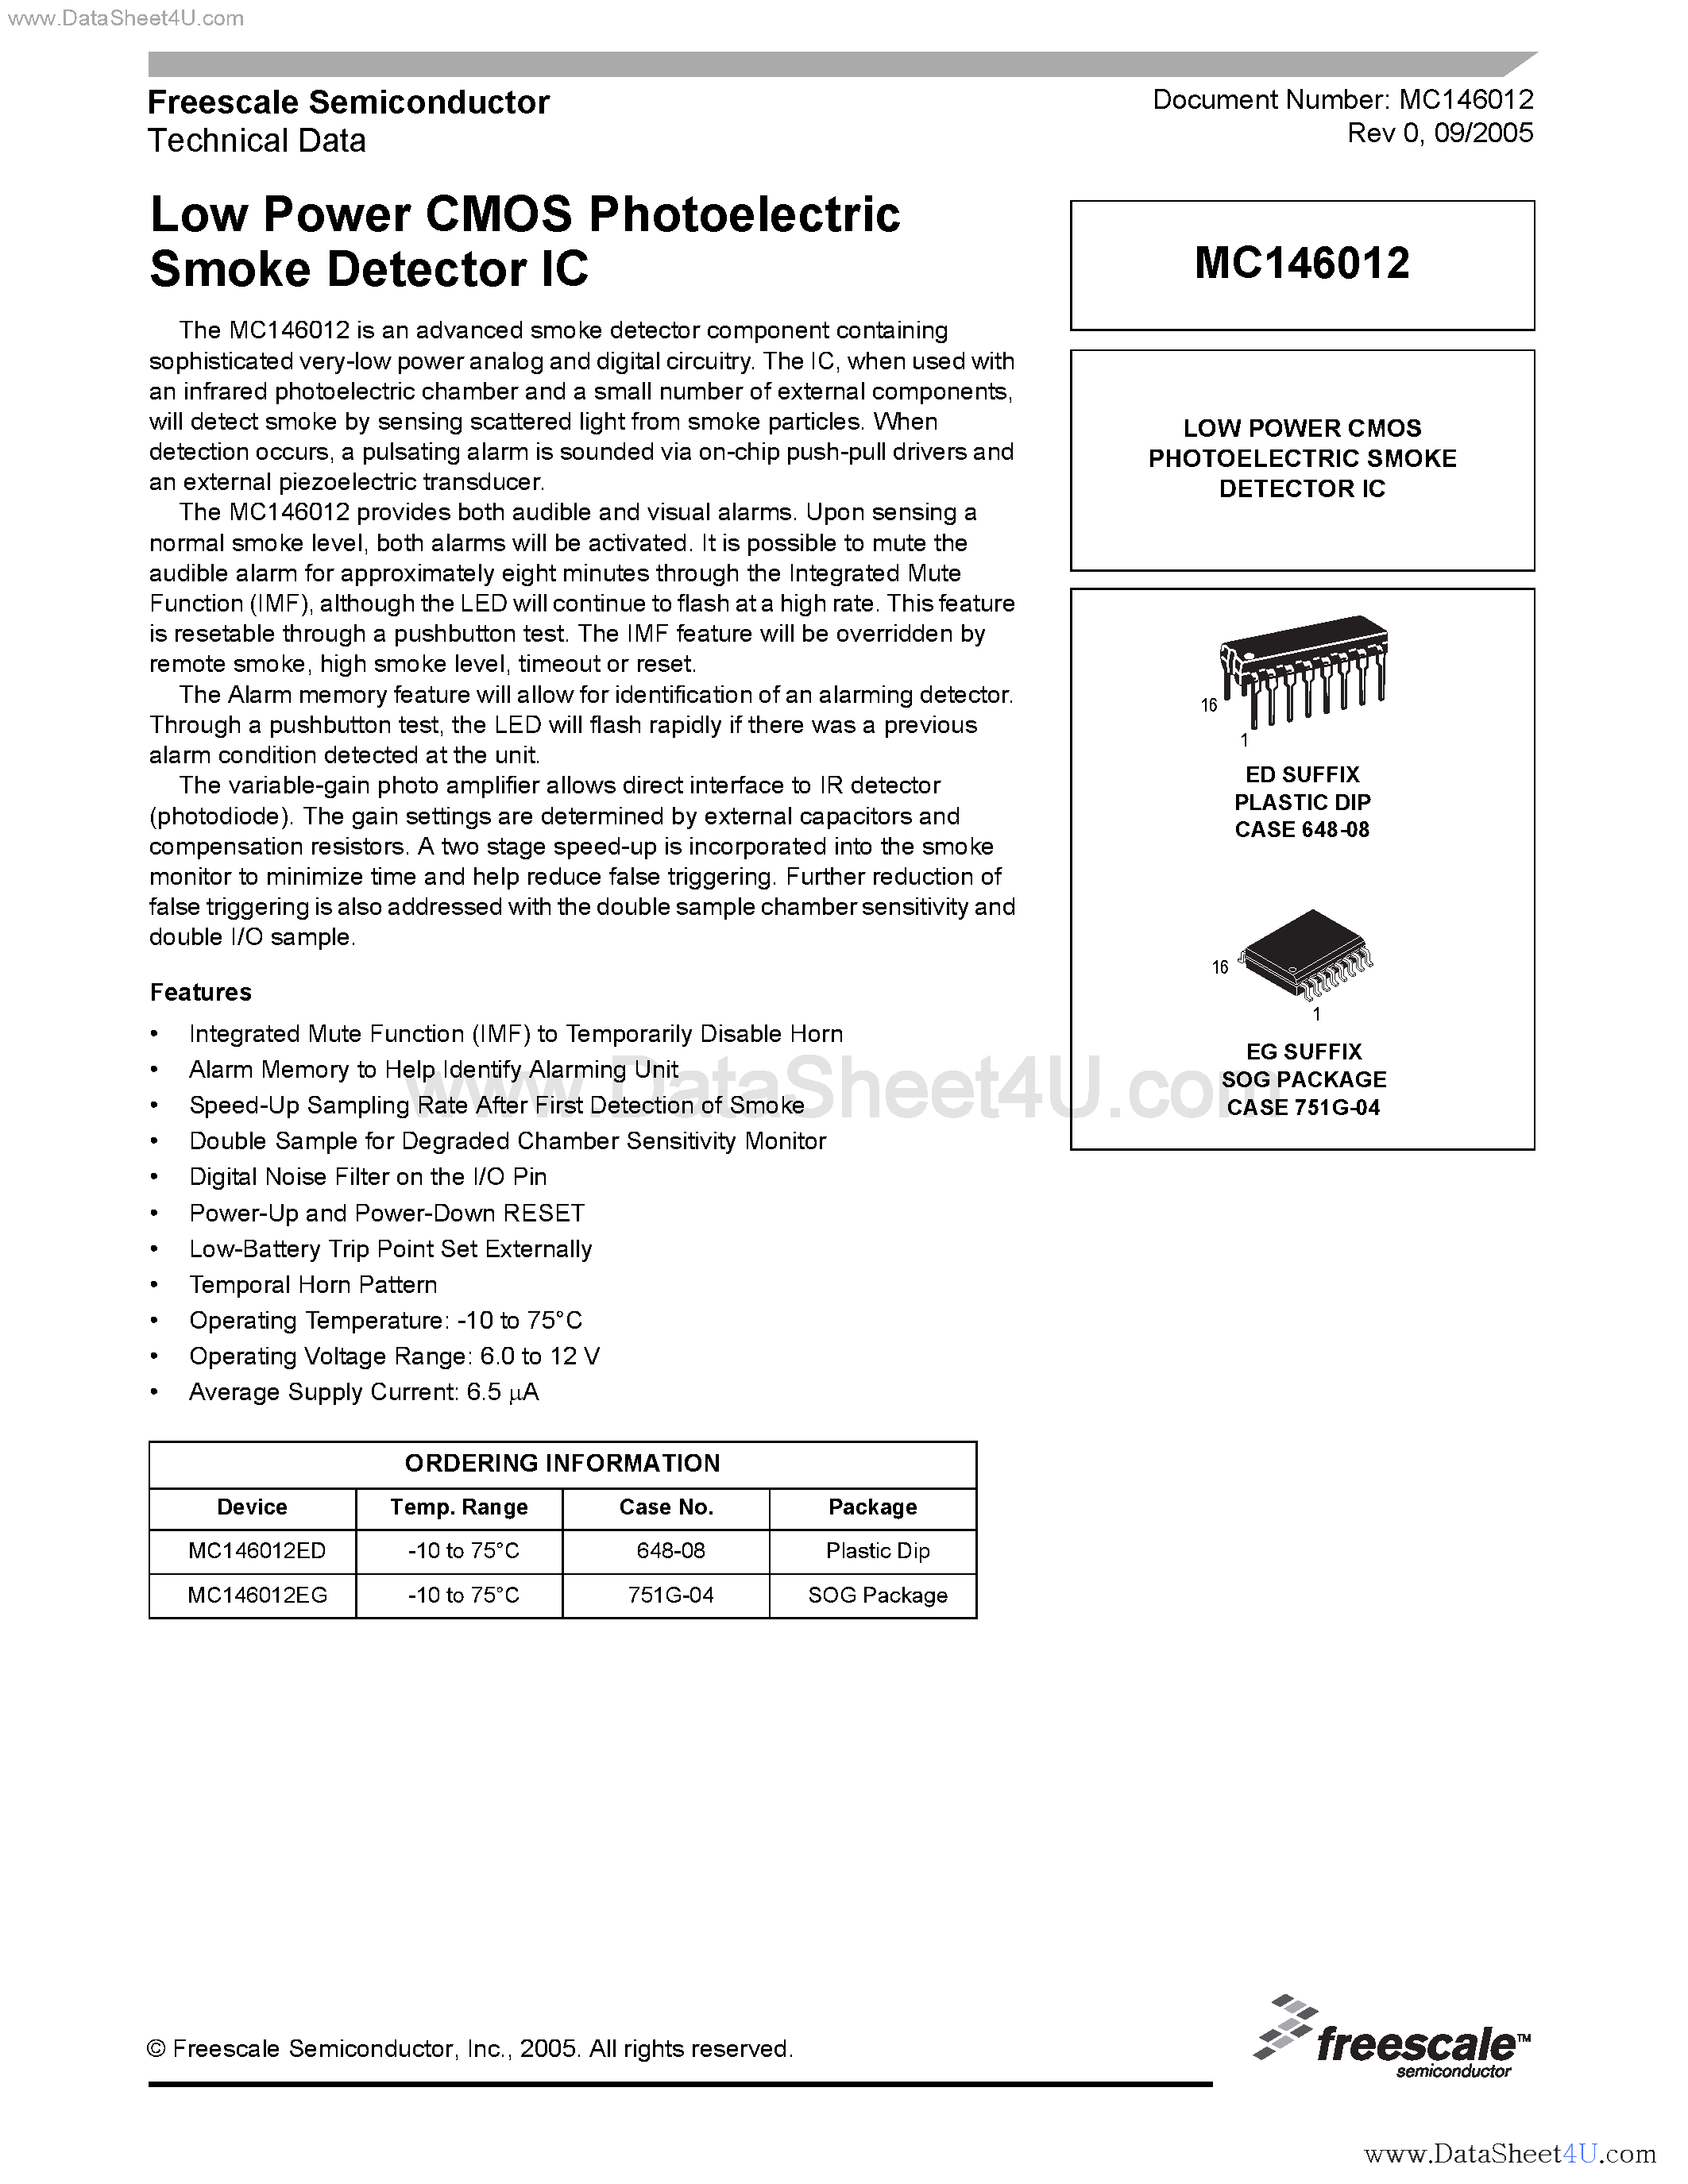 Datasheet MC146012 - Low Power CMOS Photoelectric Smoke Detector IC page 1